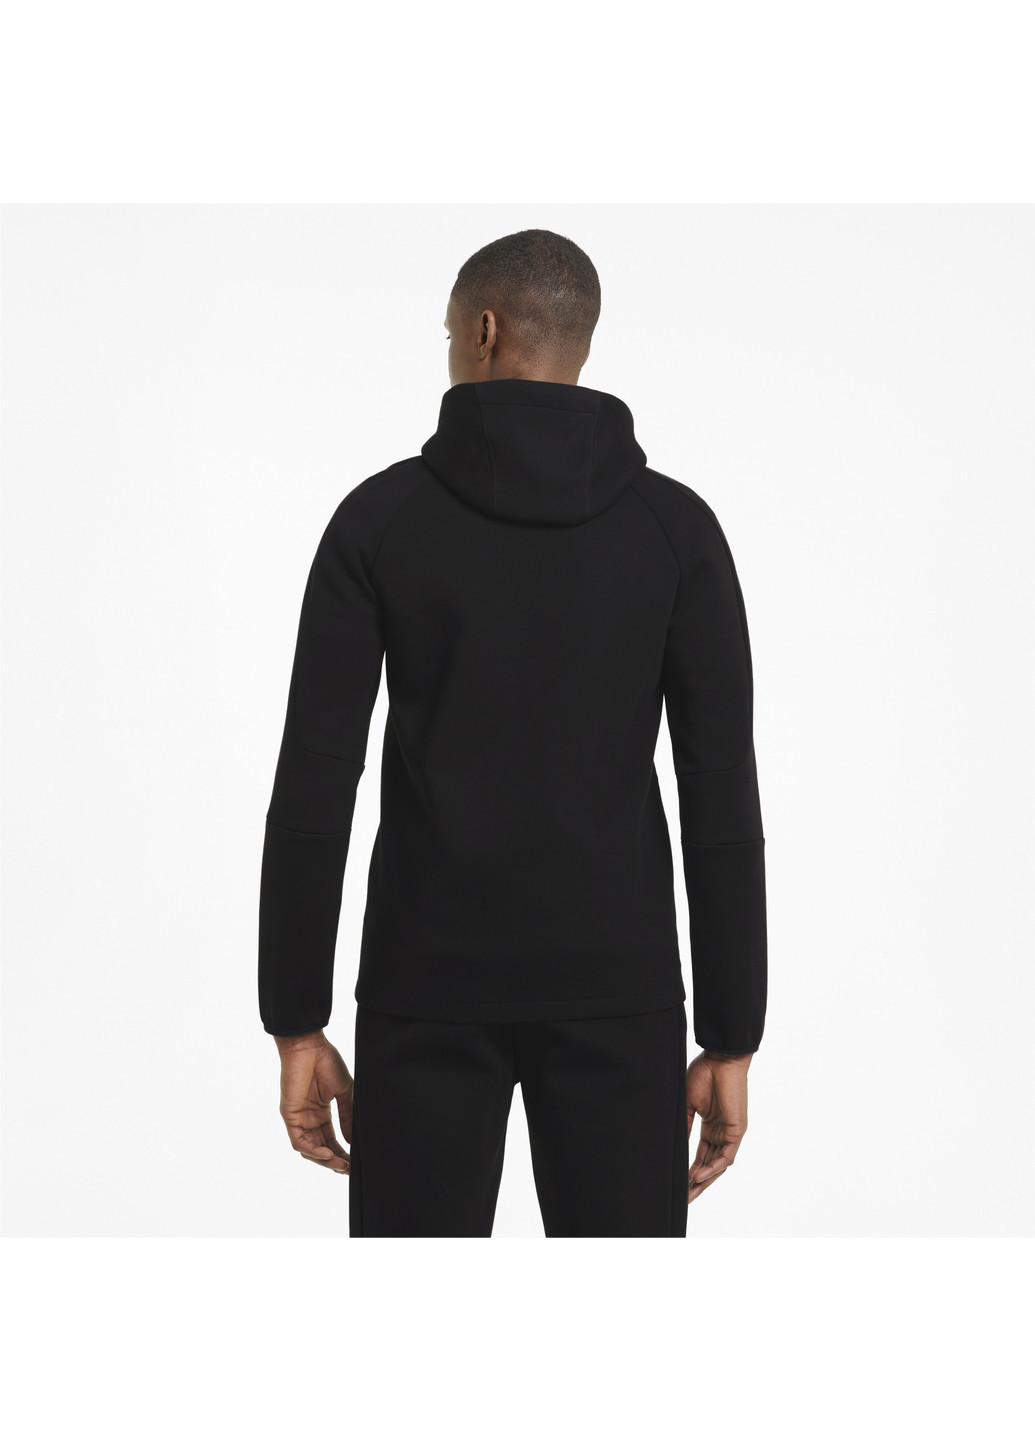 Черная демисезонная толстовка evostripe full-zip men’s hoodie Puma